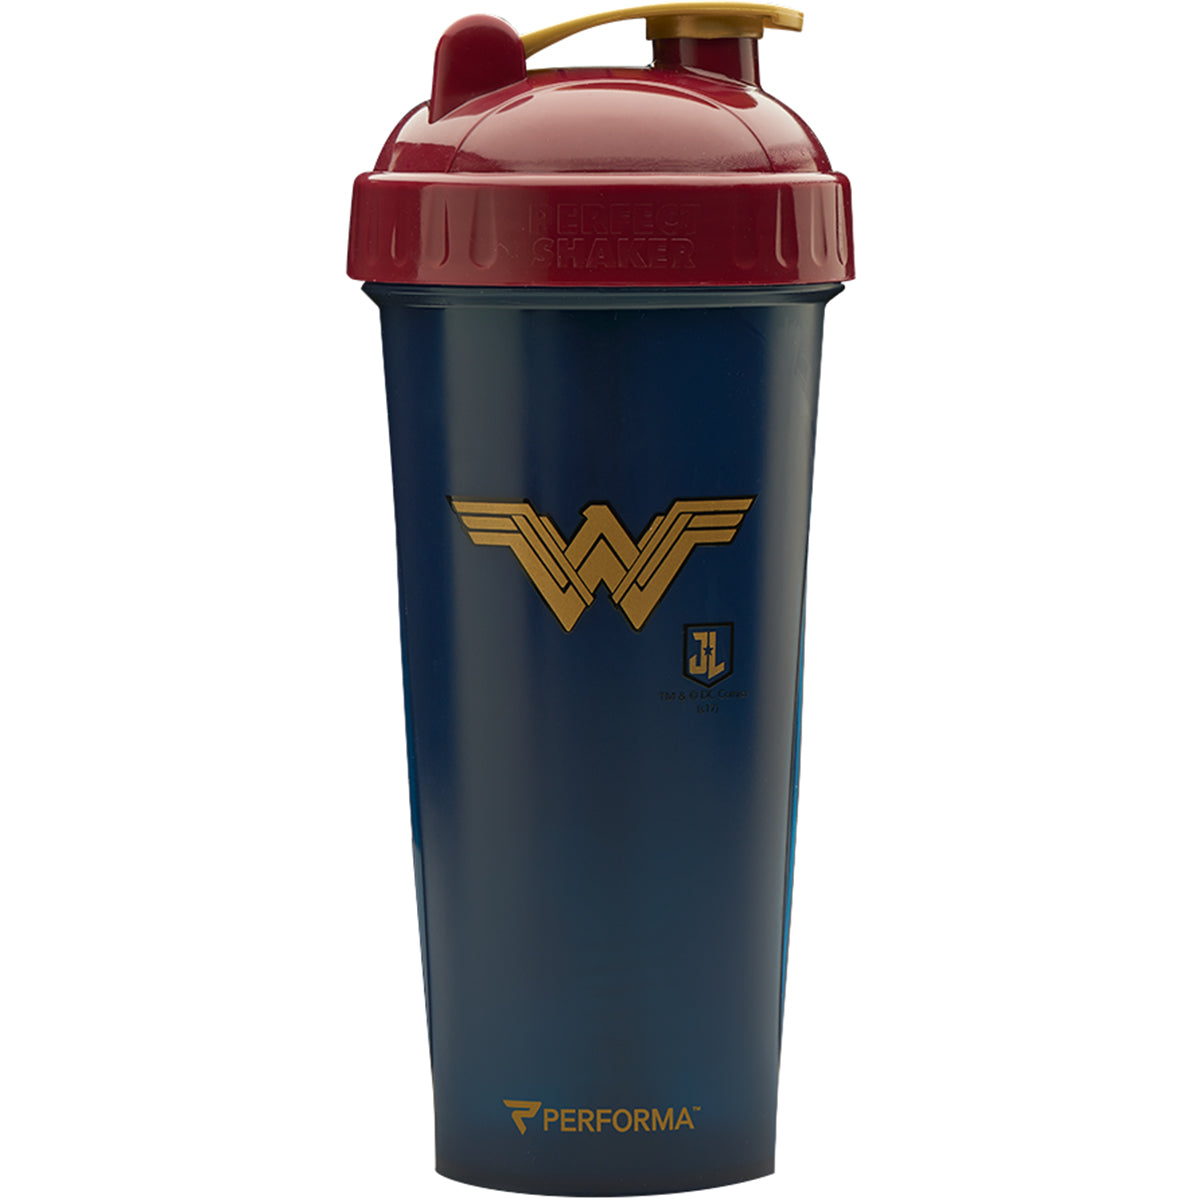 Performa PerfectShaker 28 oz. Justice League Shaker Cup Bottle - Wonder Woman PerfectShaker